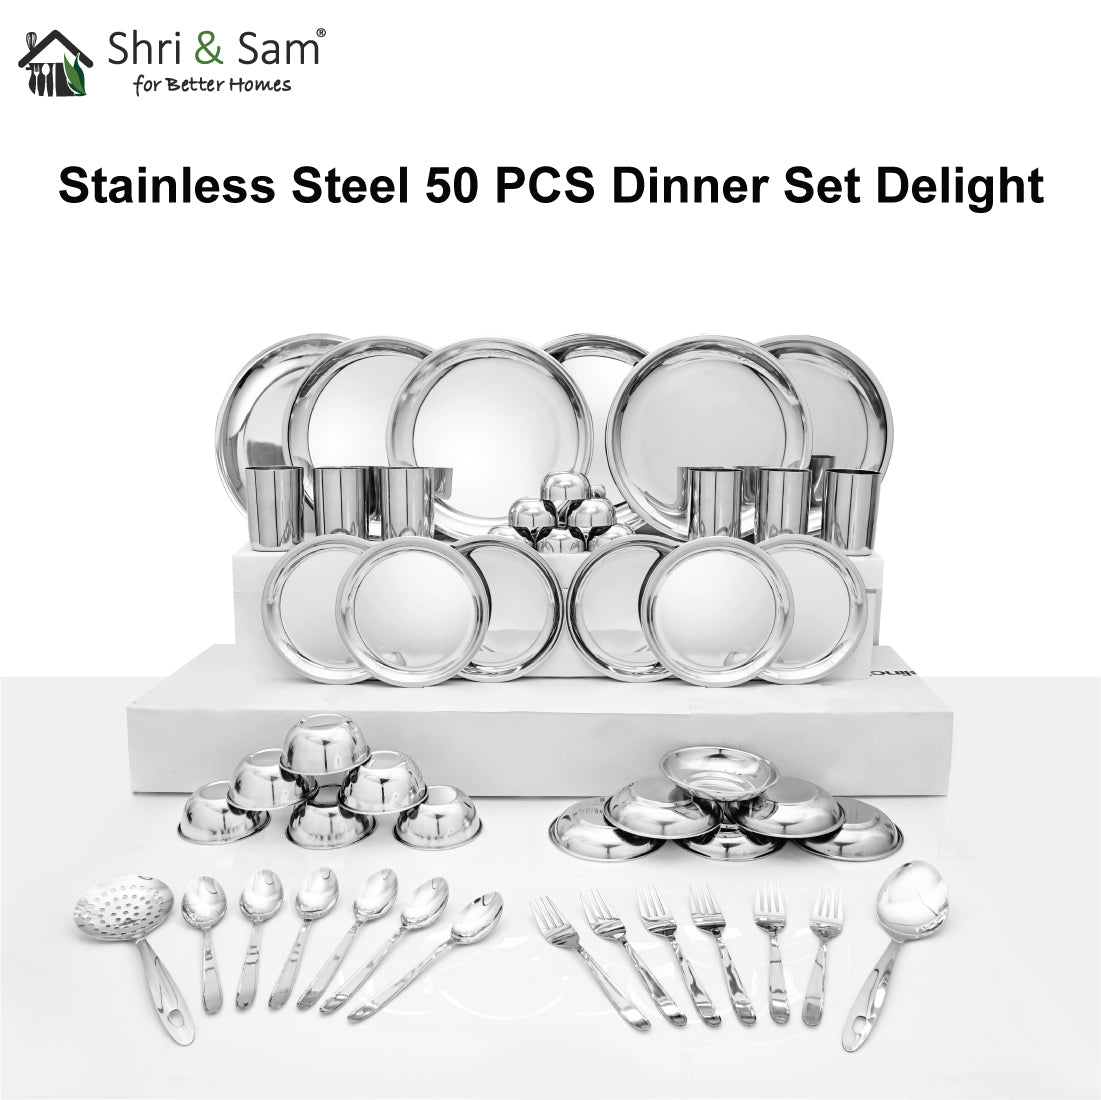 Stainless Steel 50 PCS Dinner set (6 People) Delight